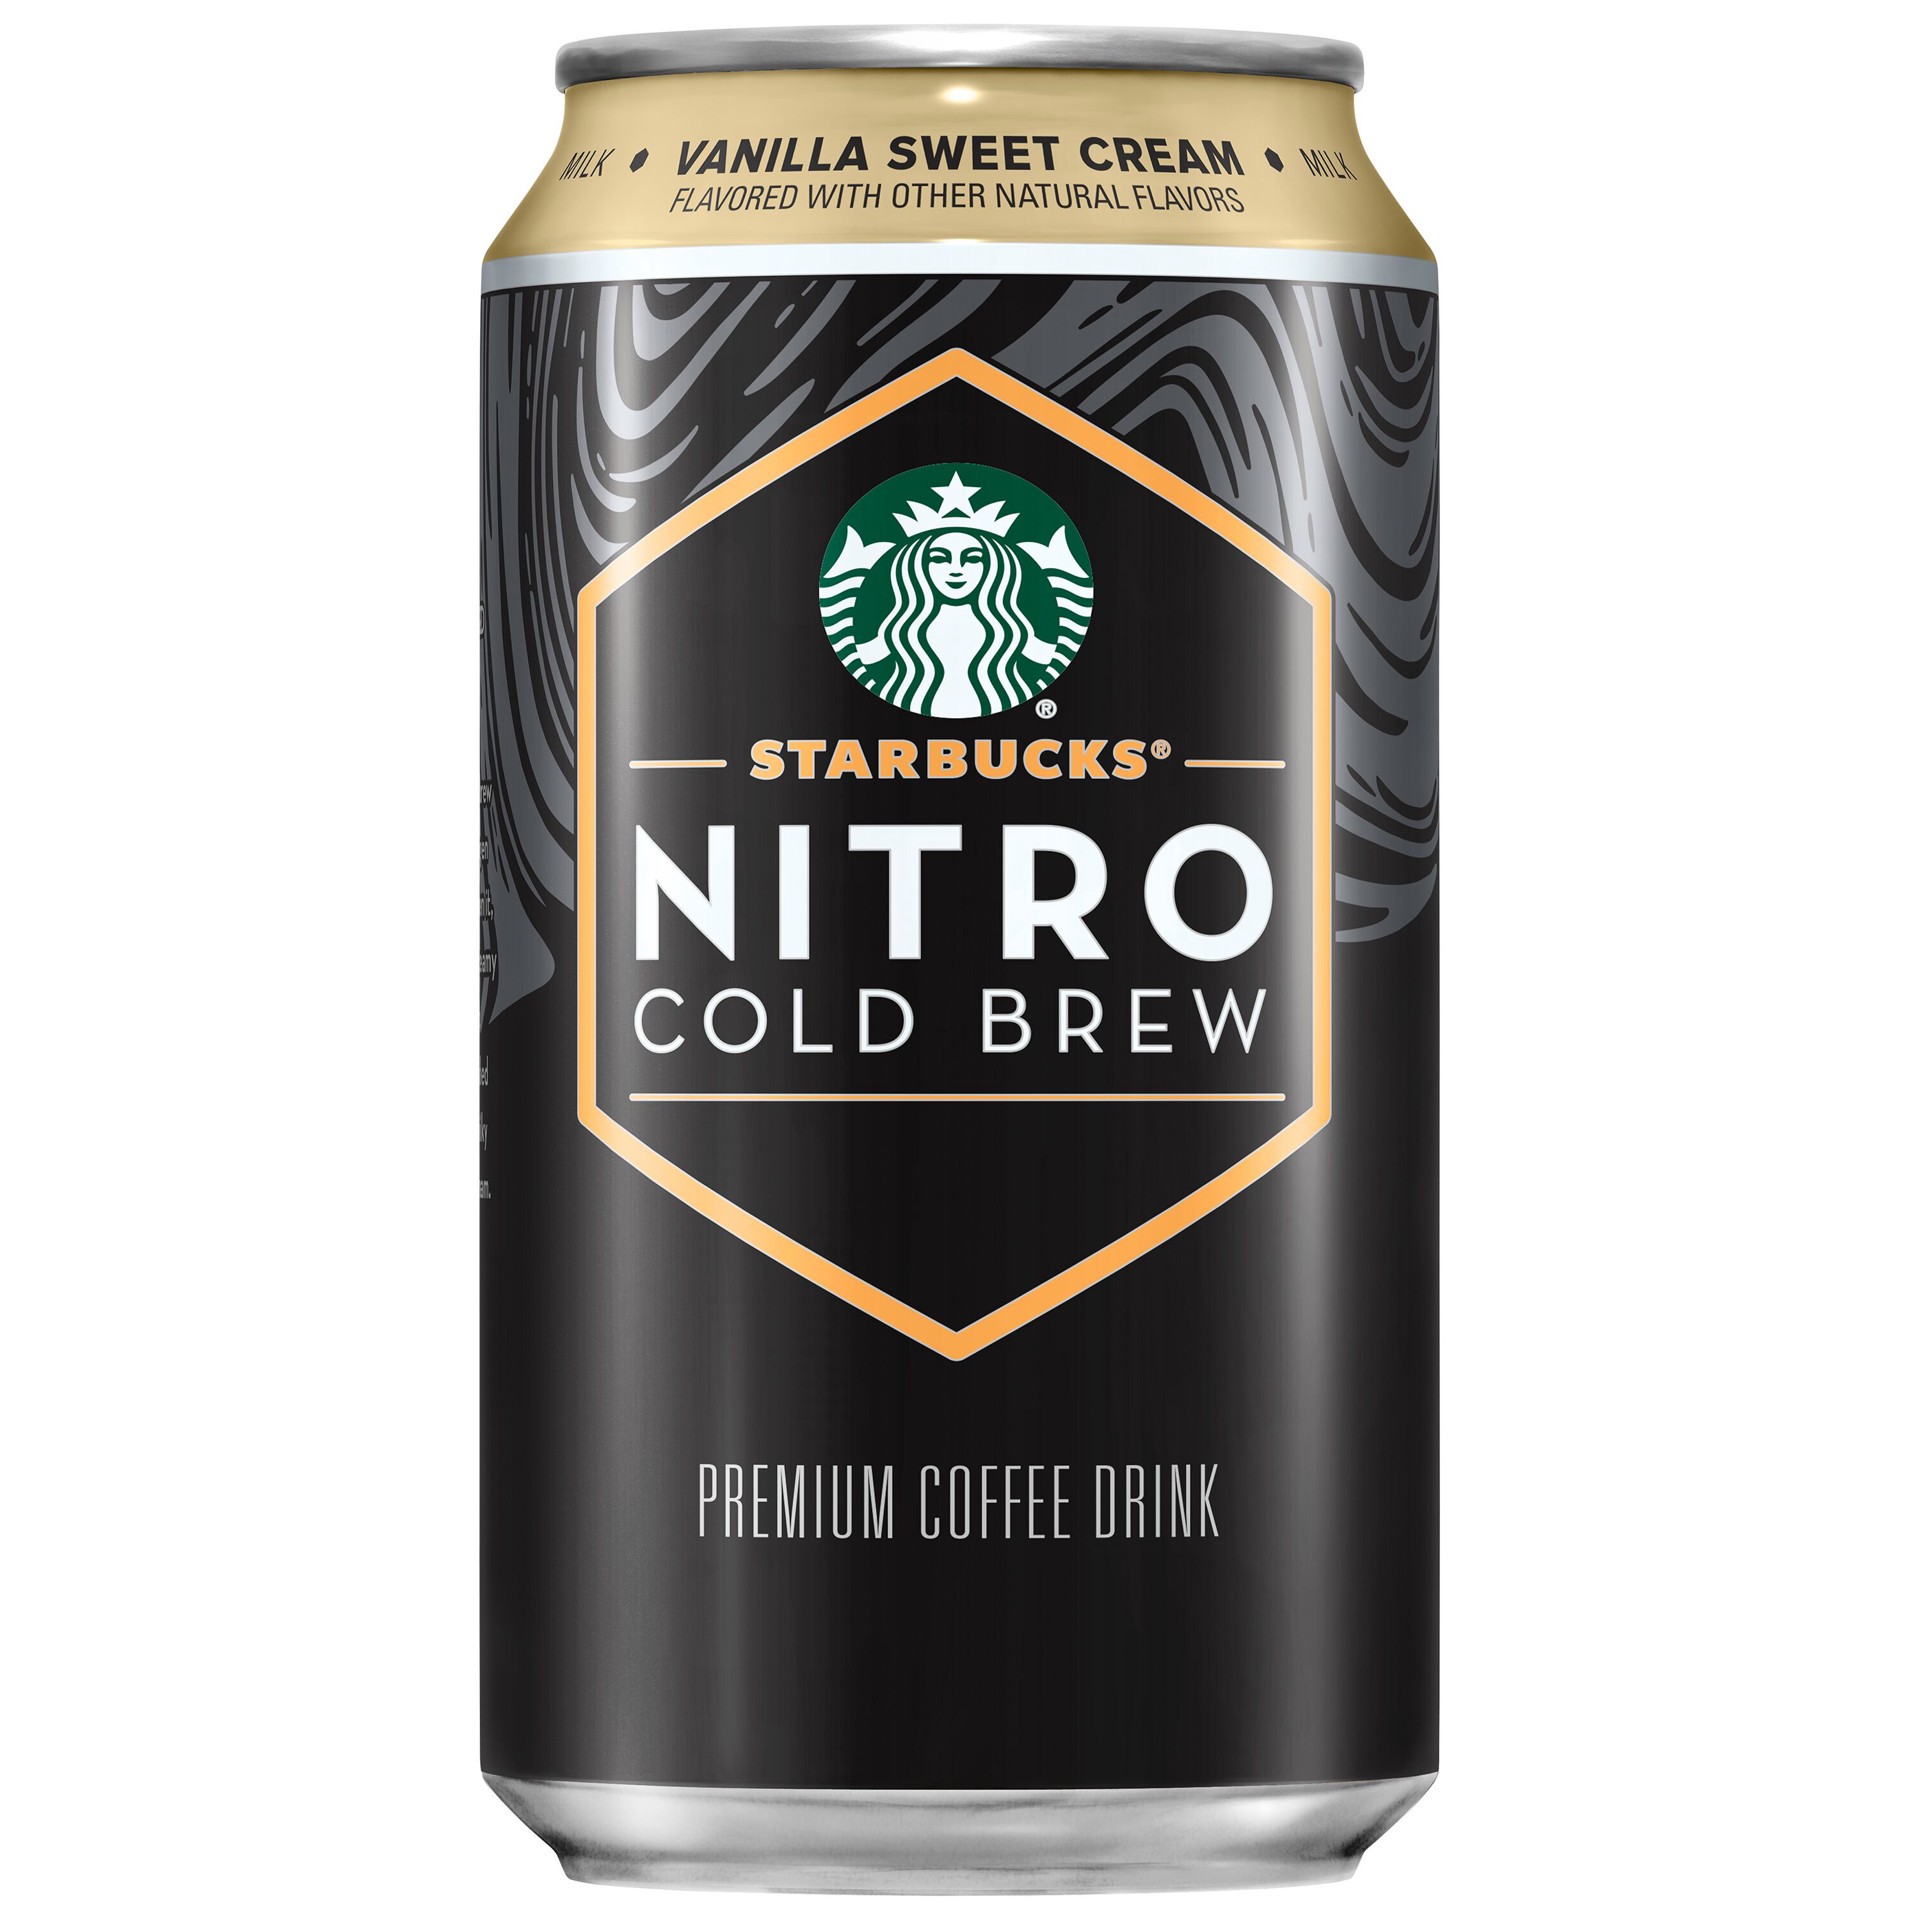 slide 1 of 5, Starbucks Nitro Cold Brew Premium Coffee Drink, Vanilla Sweet Cream Flavored, 9.6 fl oz